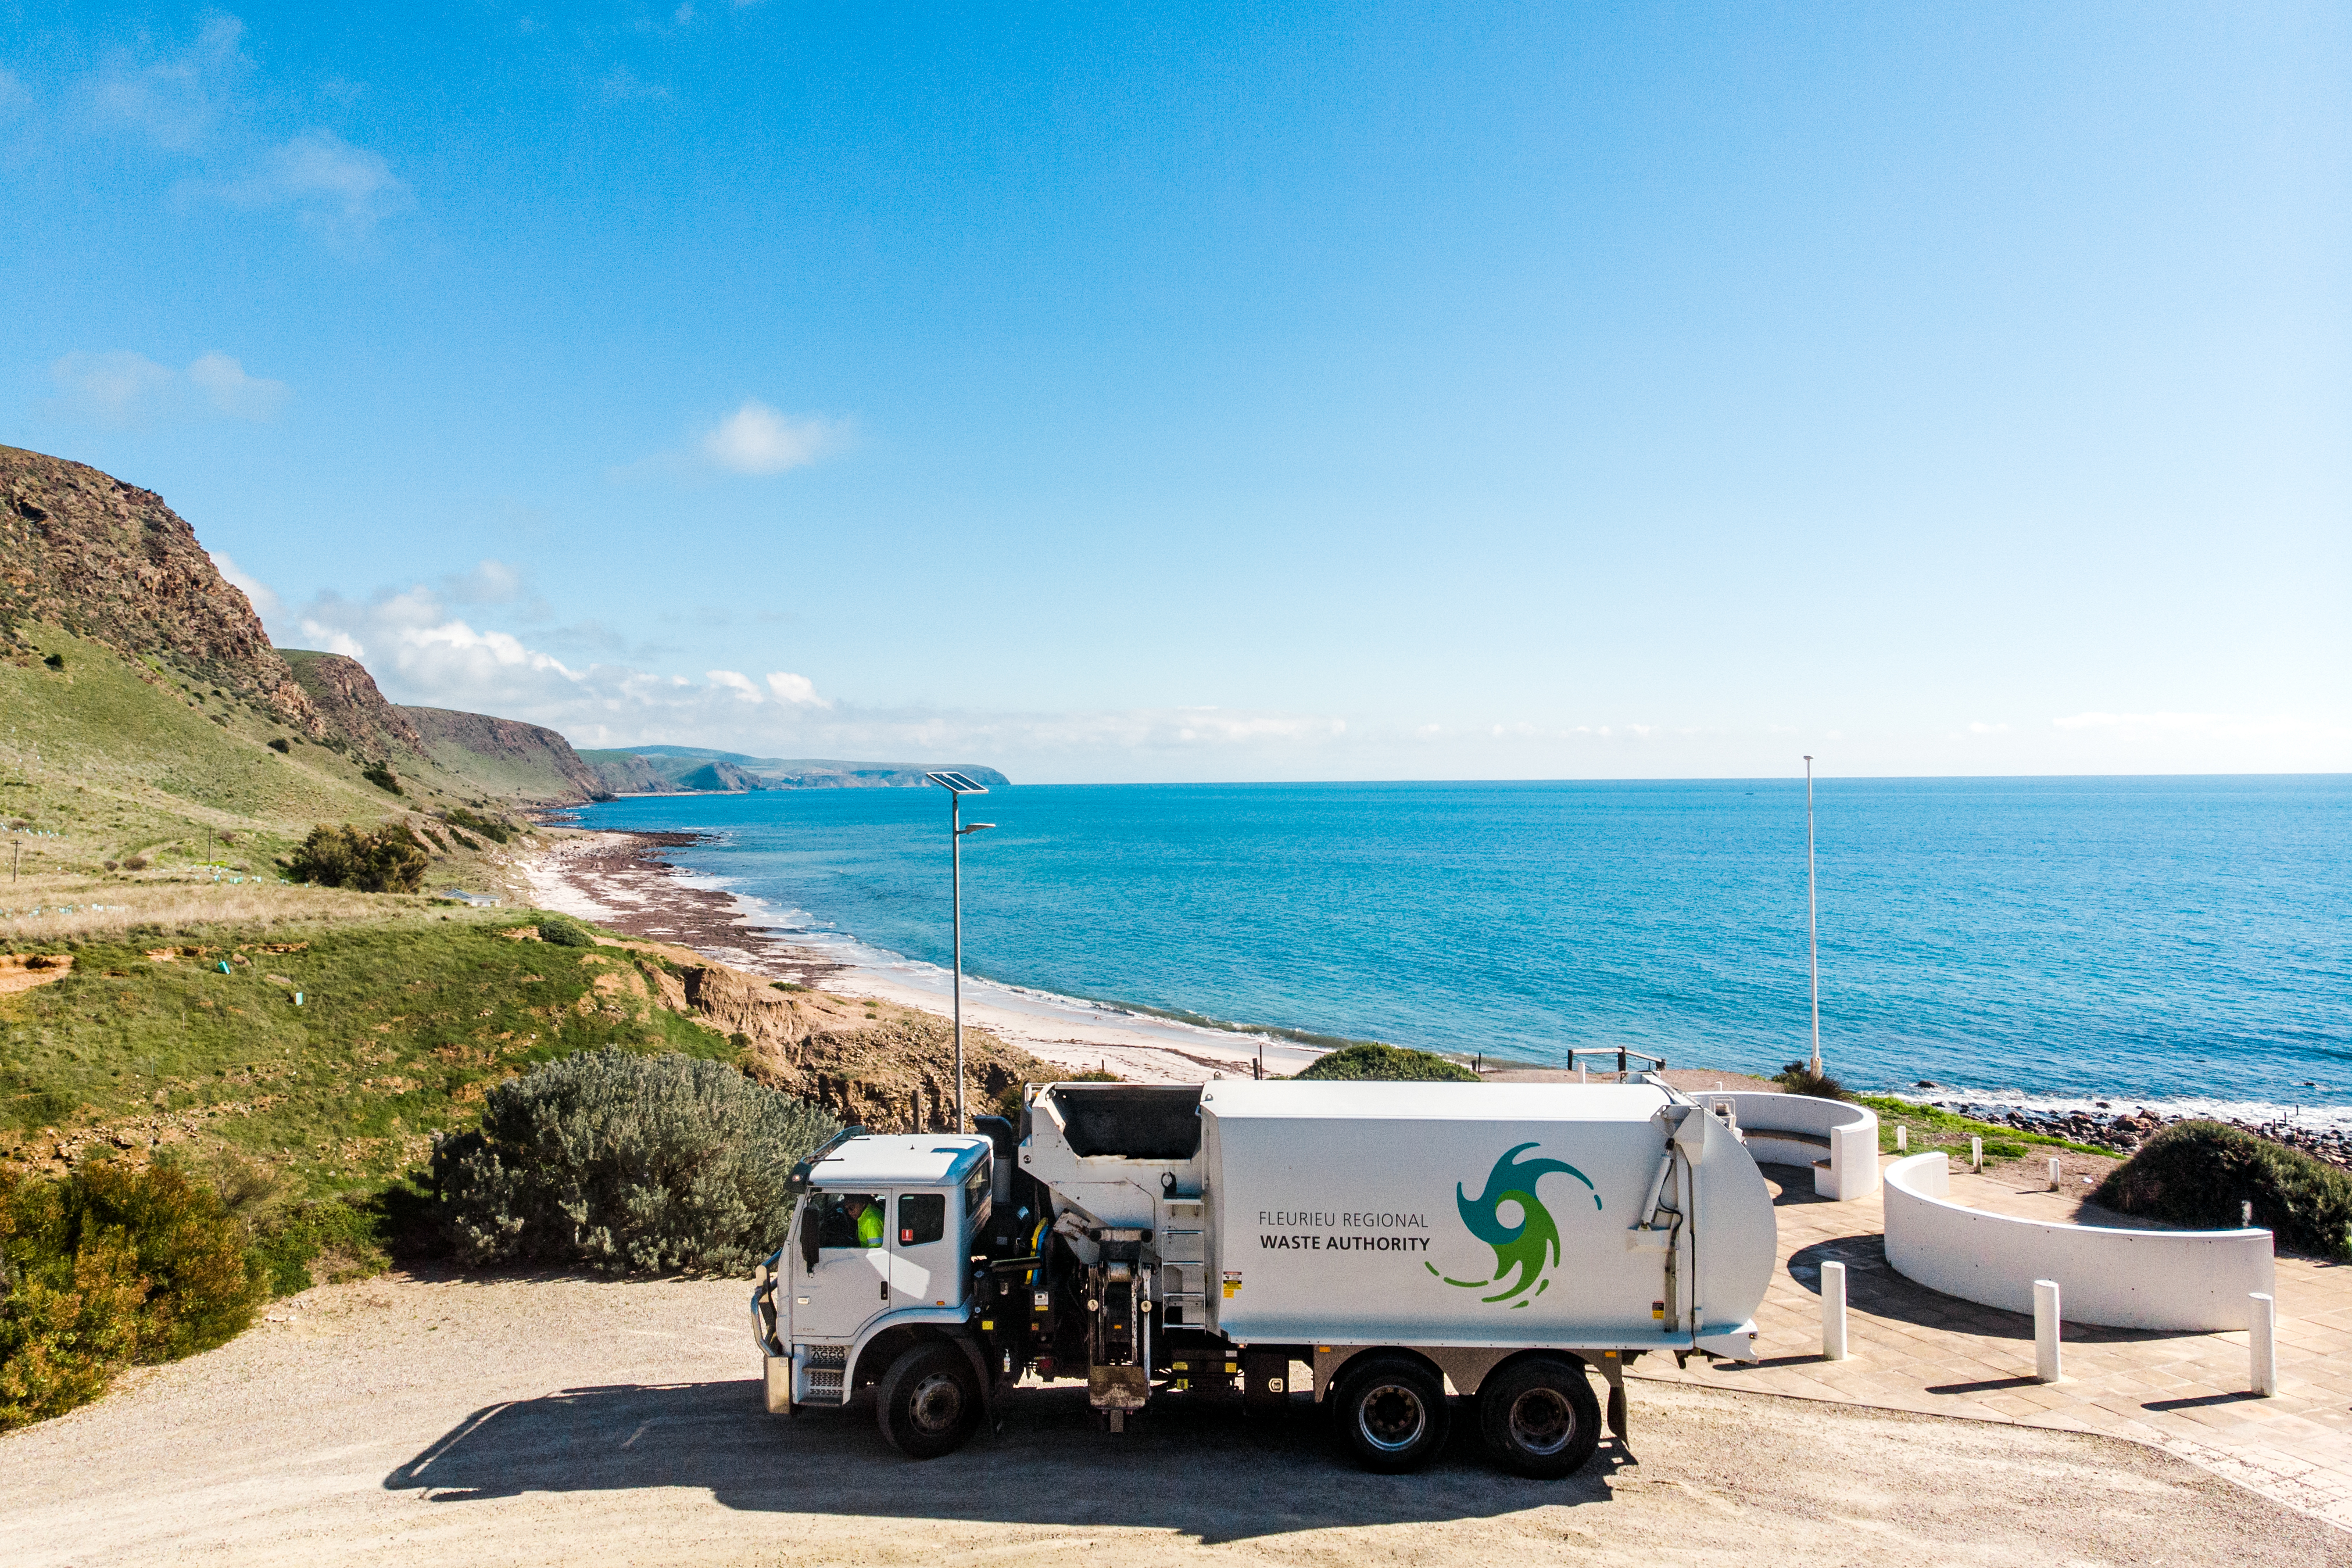 The Fleurieu Regional Waste Authority Waste Management Truck